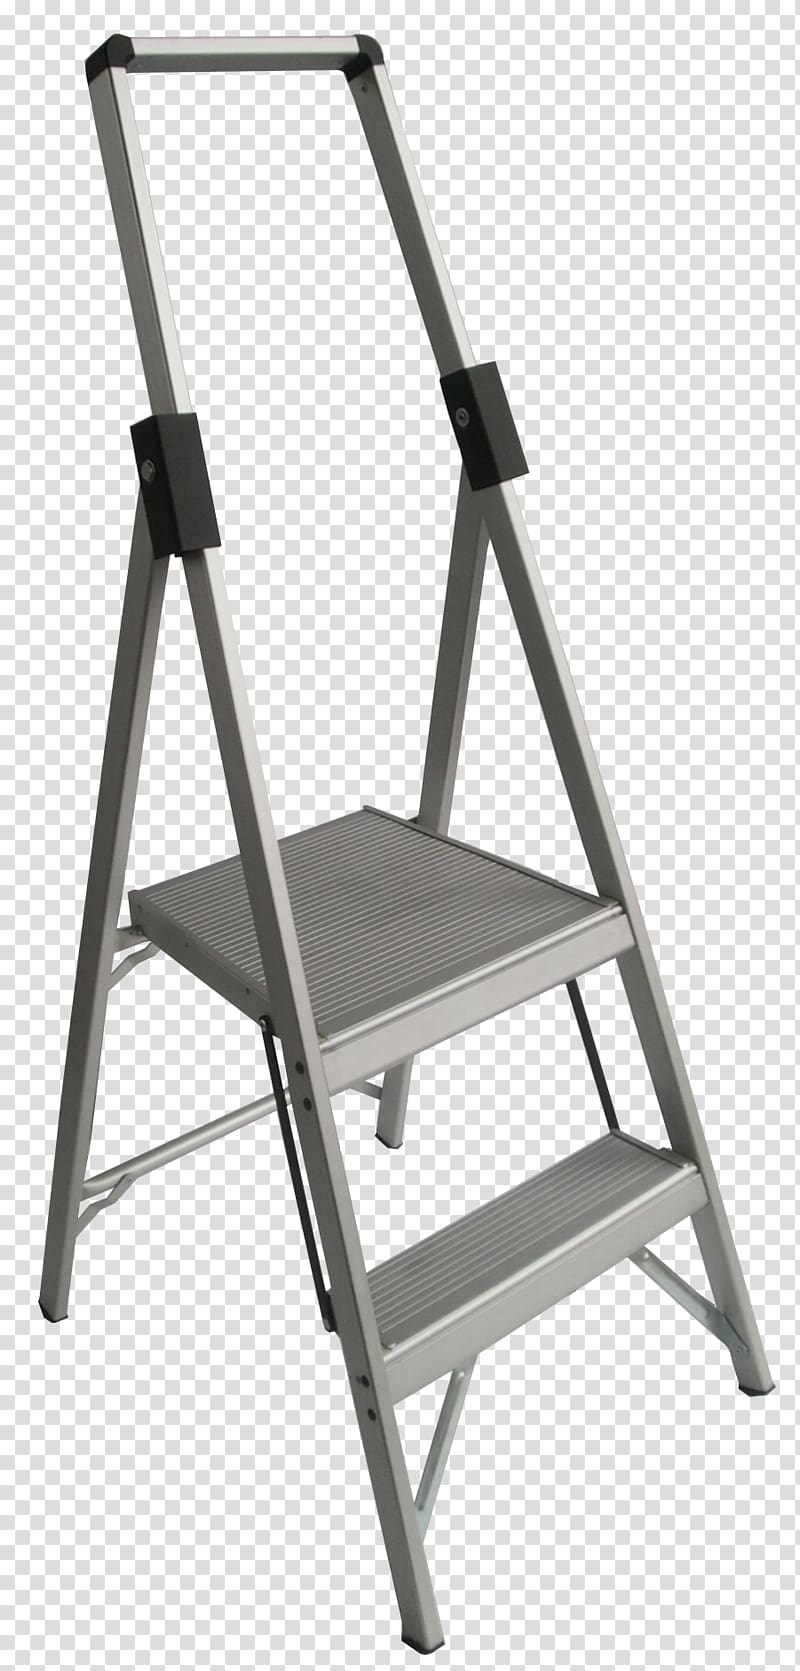 Ladder Aluminium Architectural engineering Aerial work platform, ladder transparent background PNG clipart